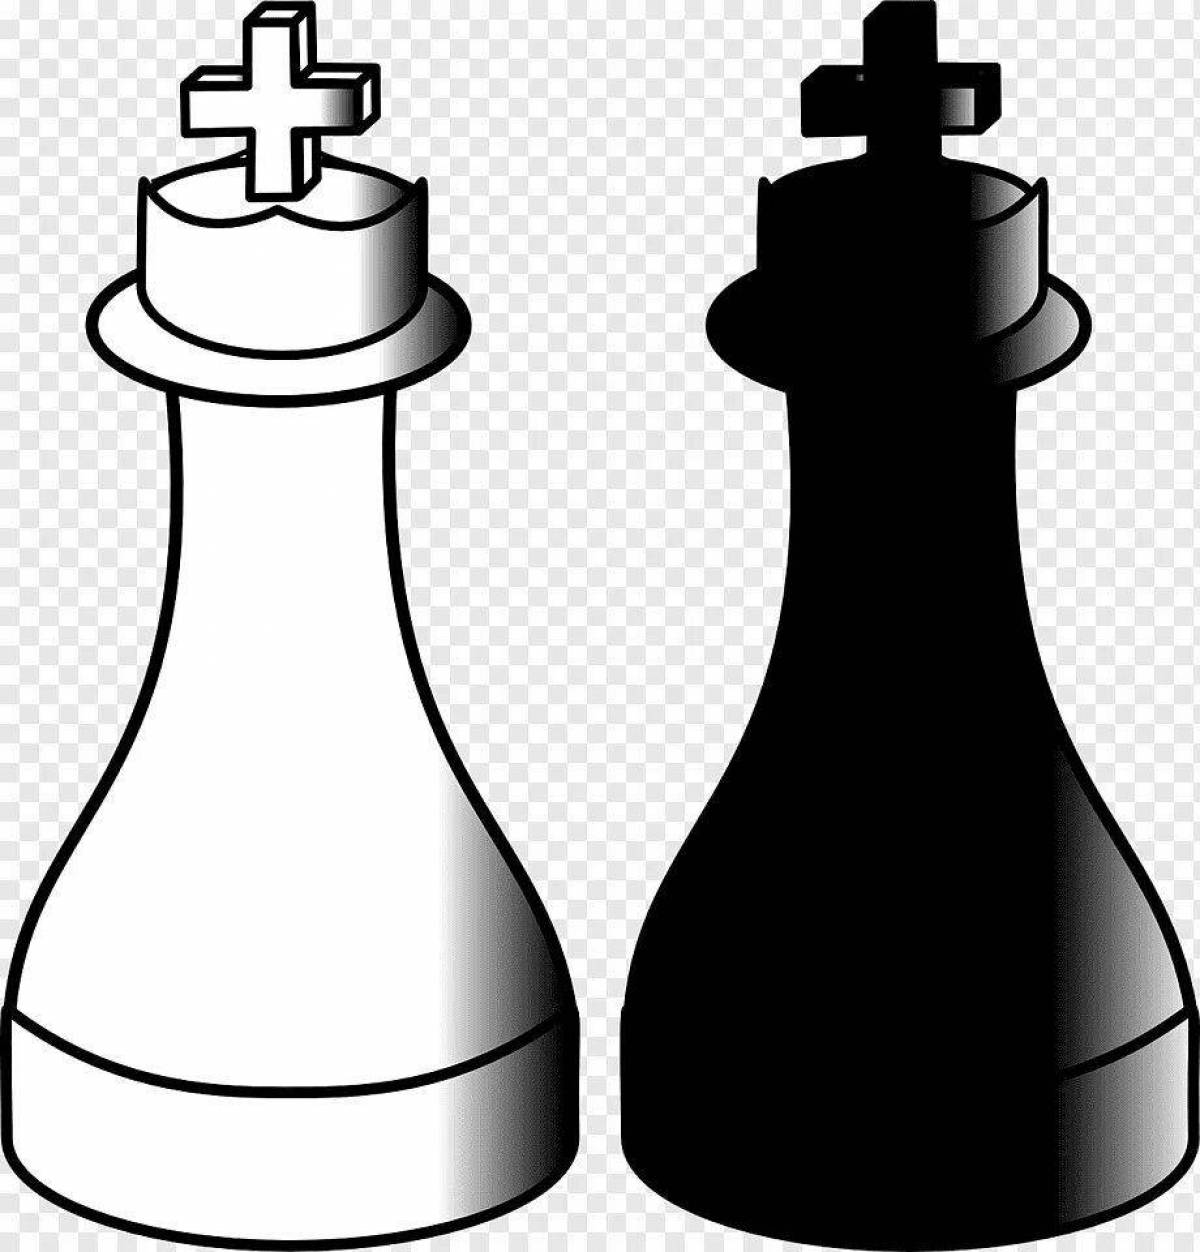 Royal chess king coloring page